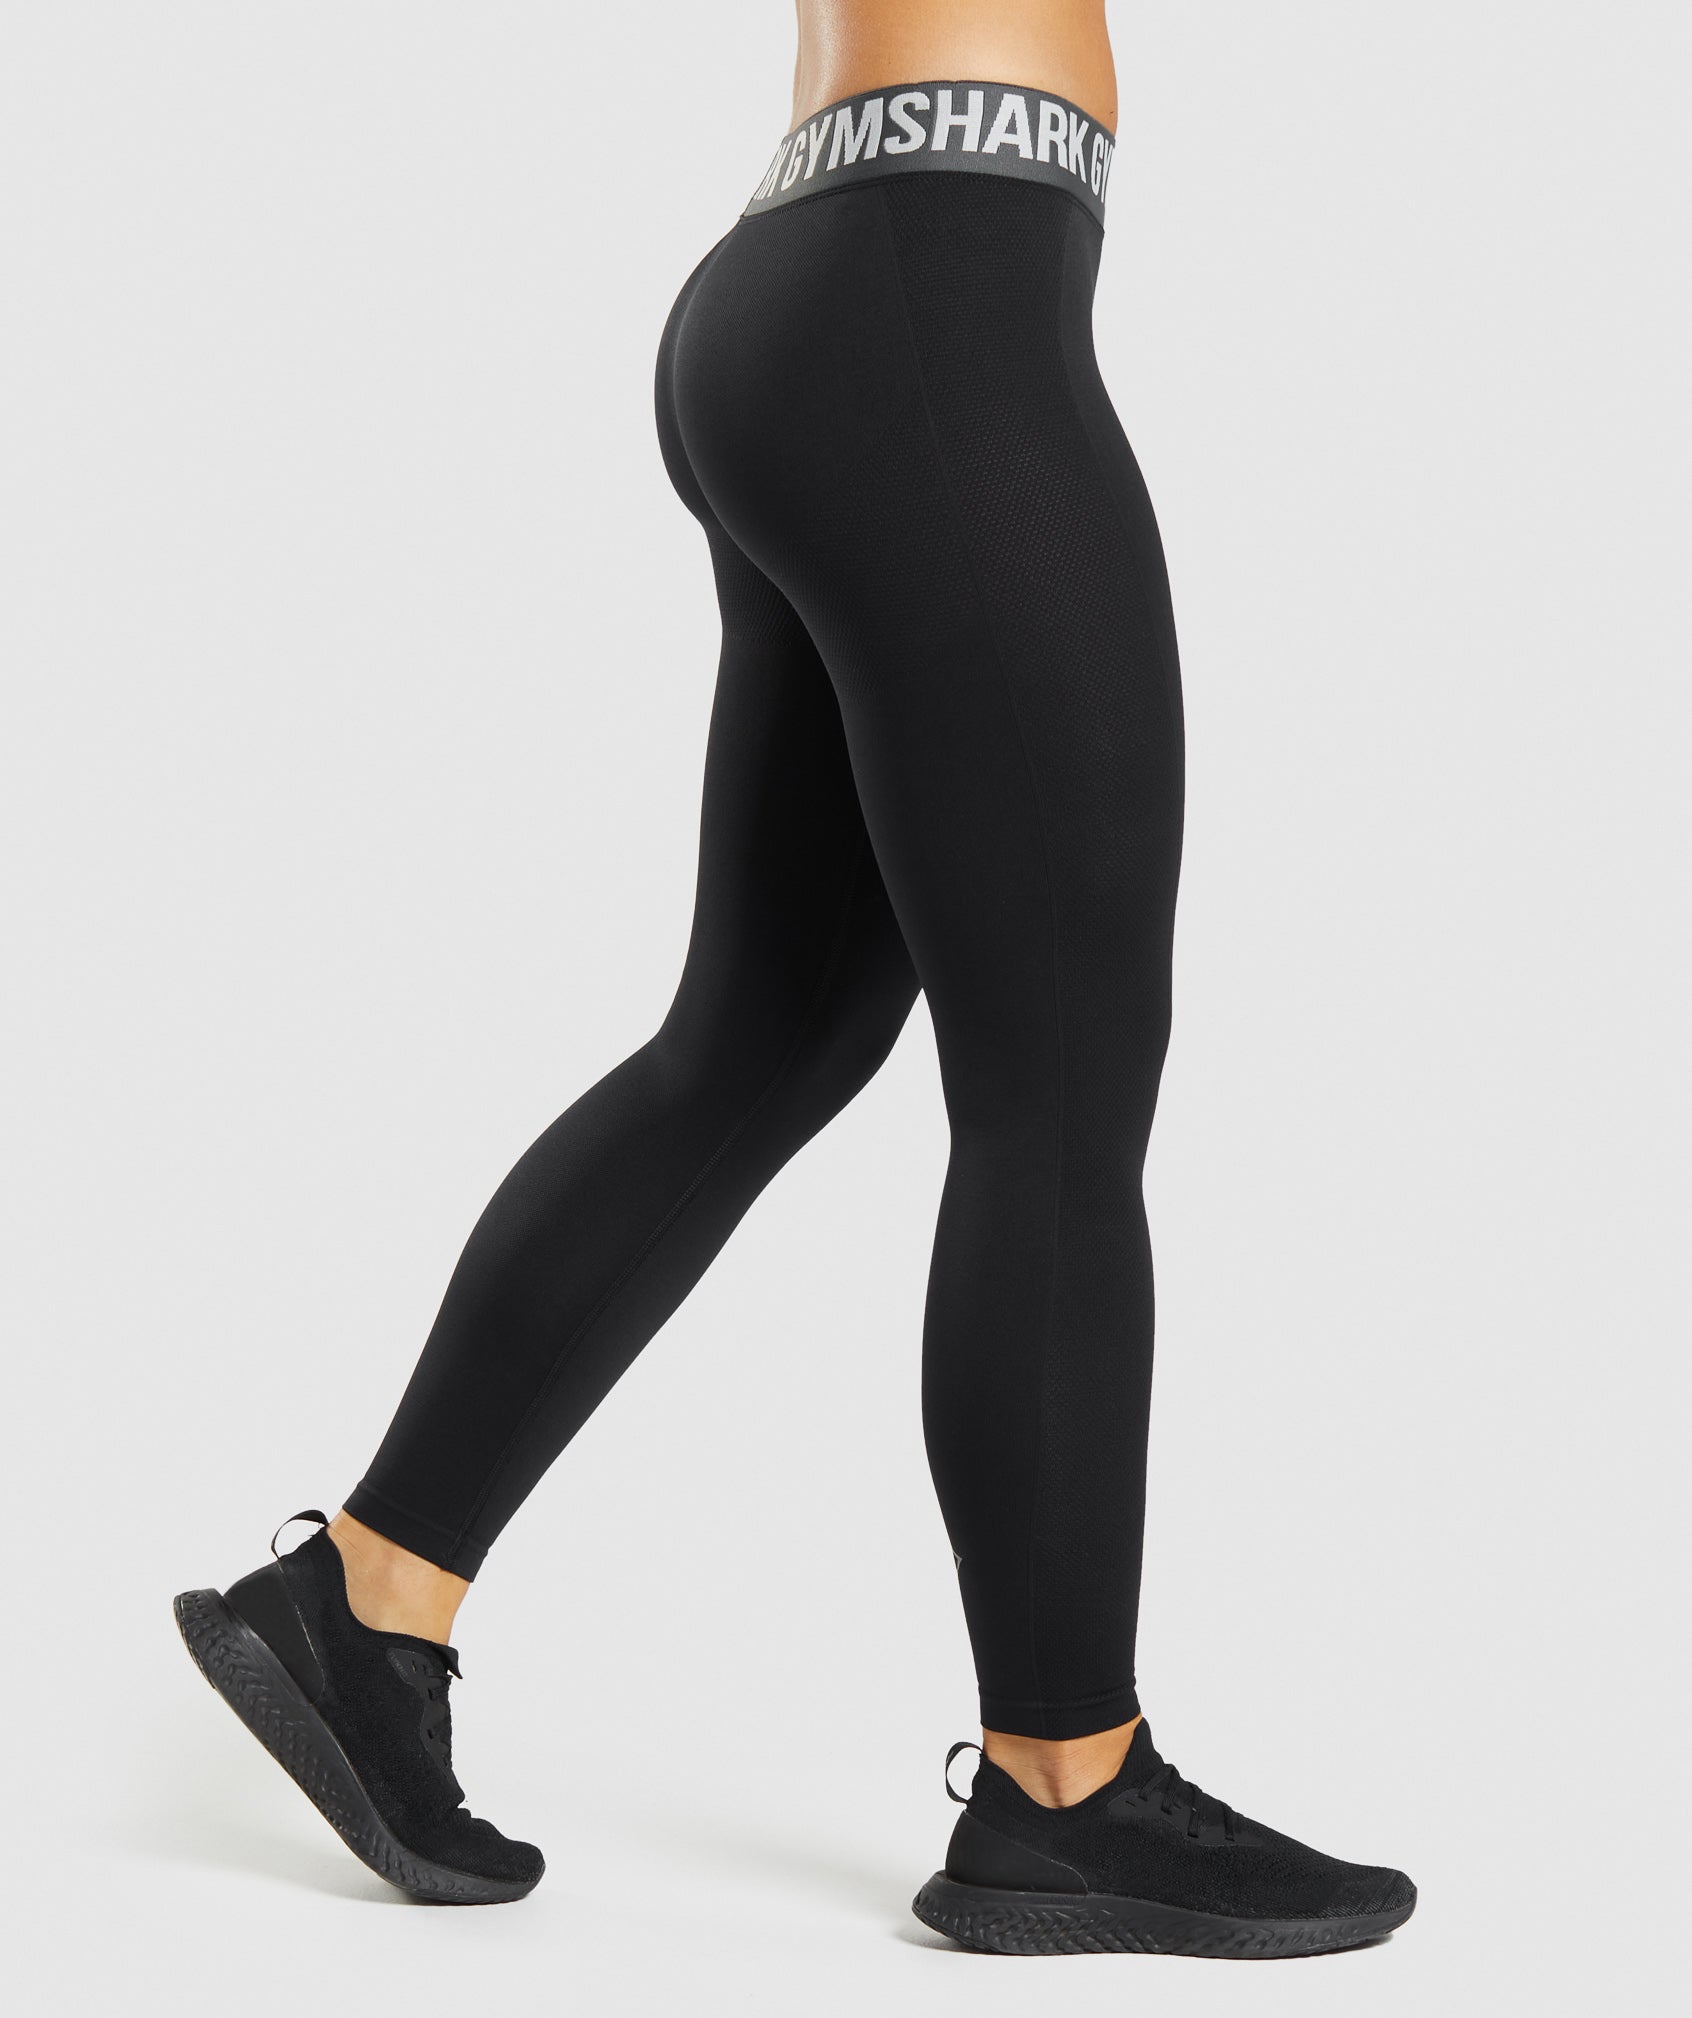 Gymshark Flex Low Rise Light Gray yellow Leggings Pants Women Size